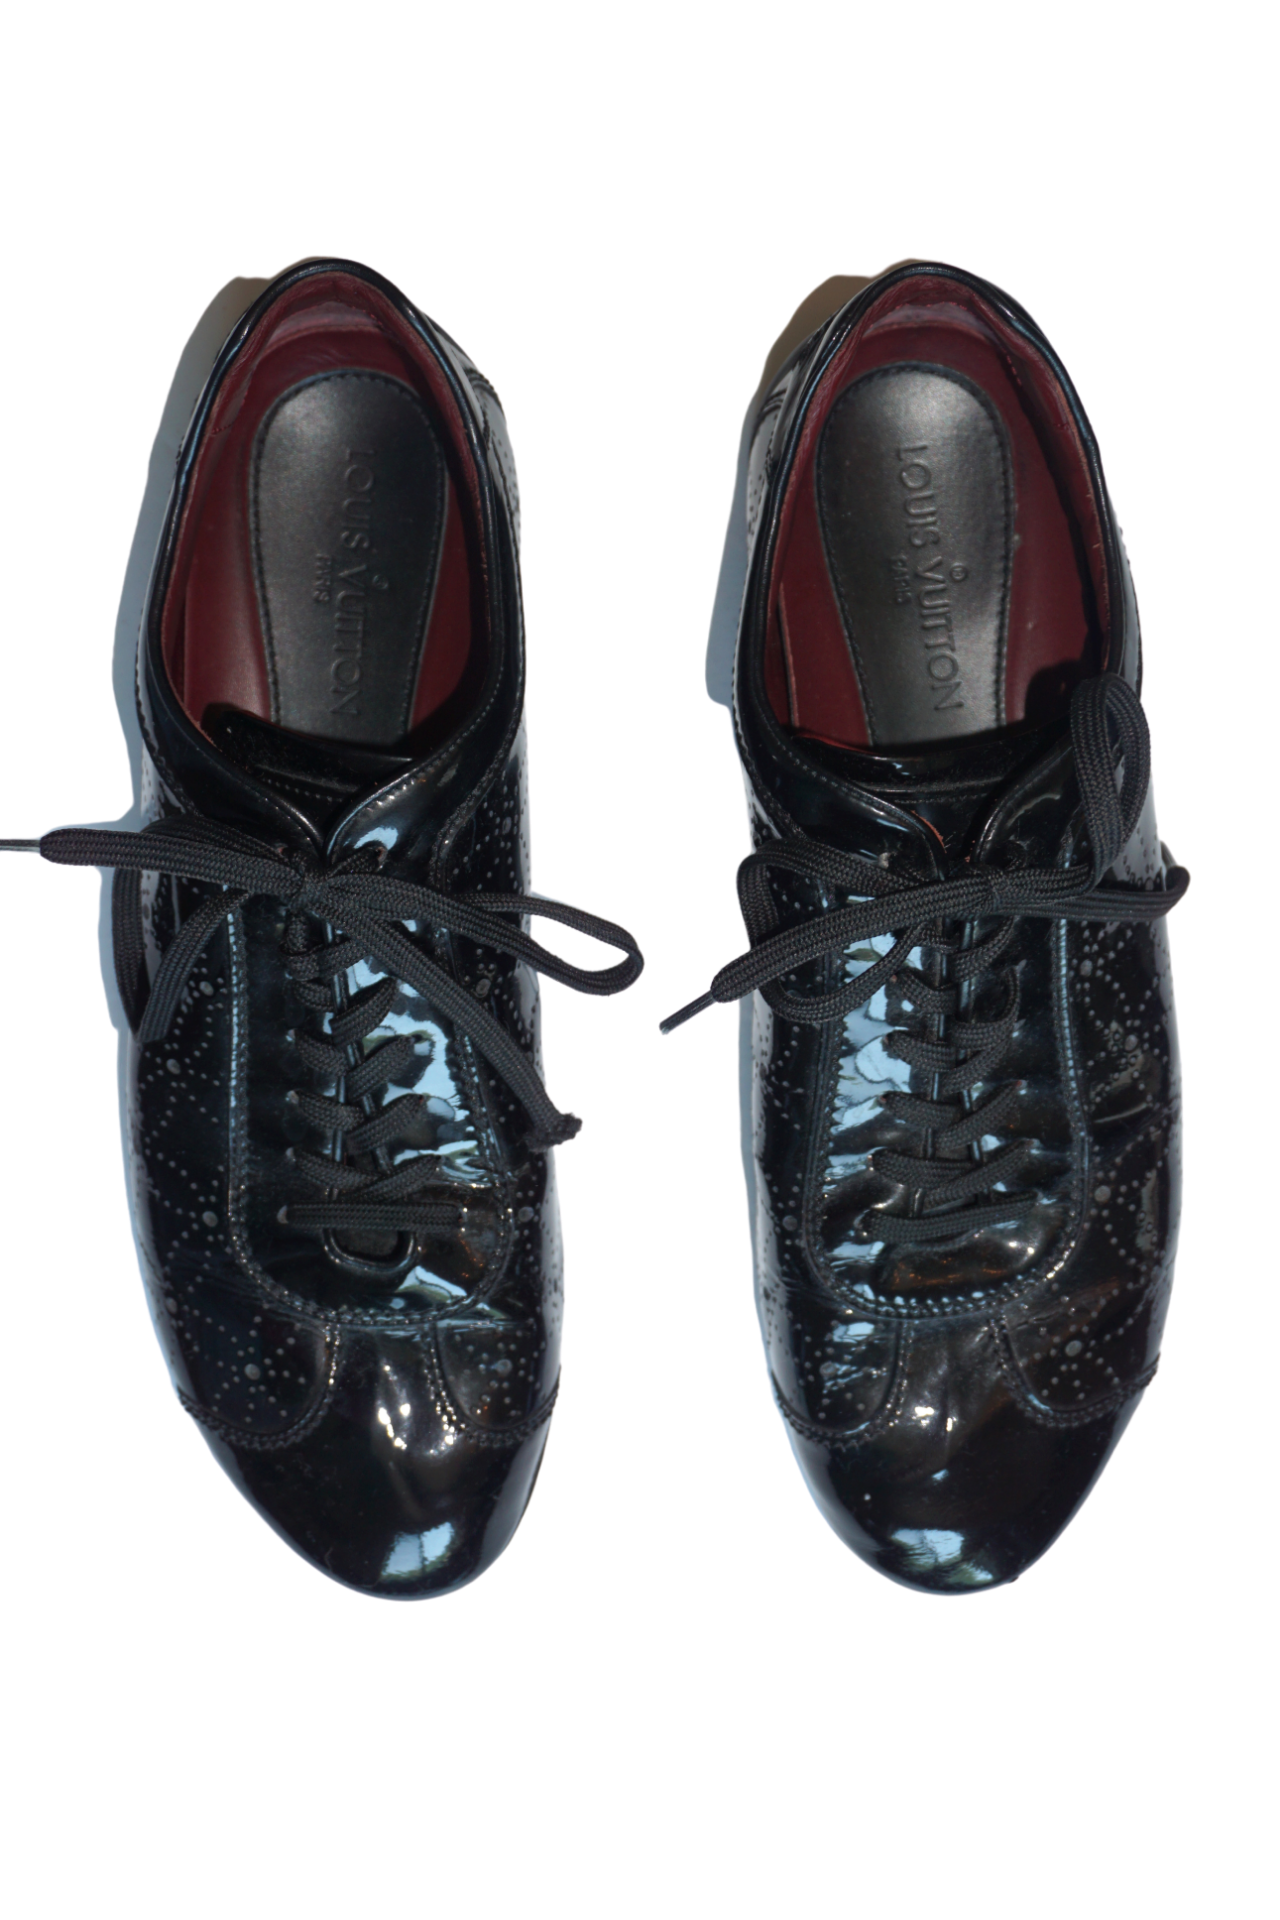 Louis Vuitton Brown Damier Ebene Canvas Low Top Sneakers UK 8/EU 42